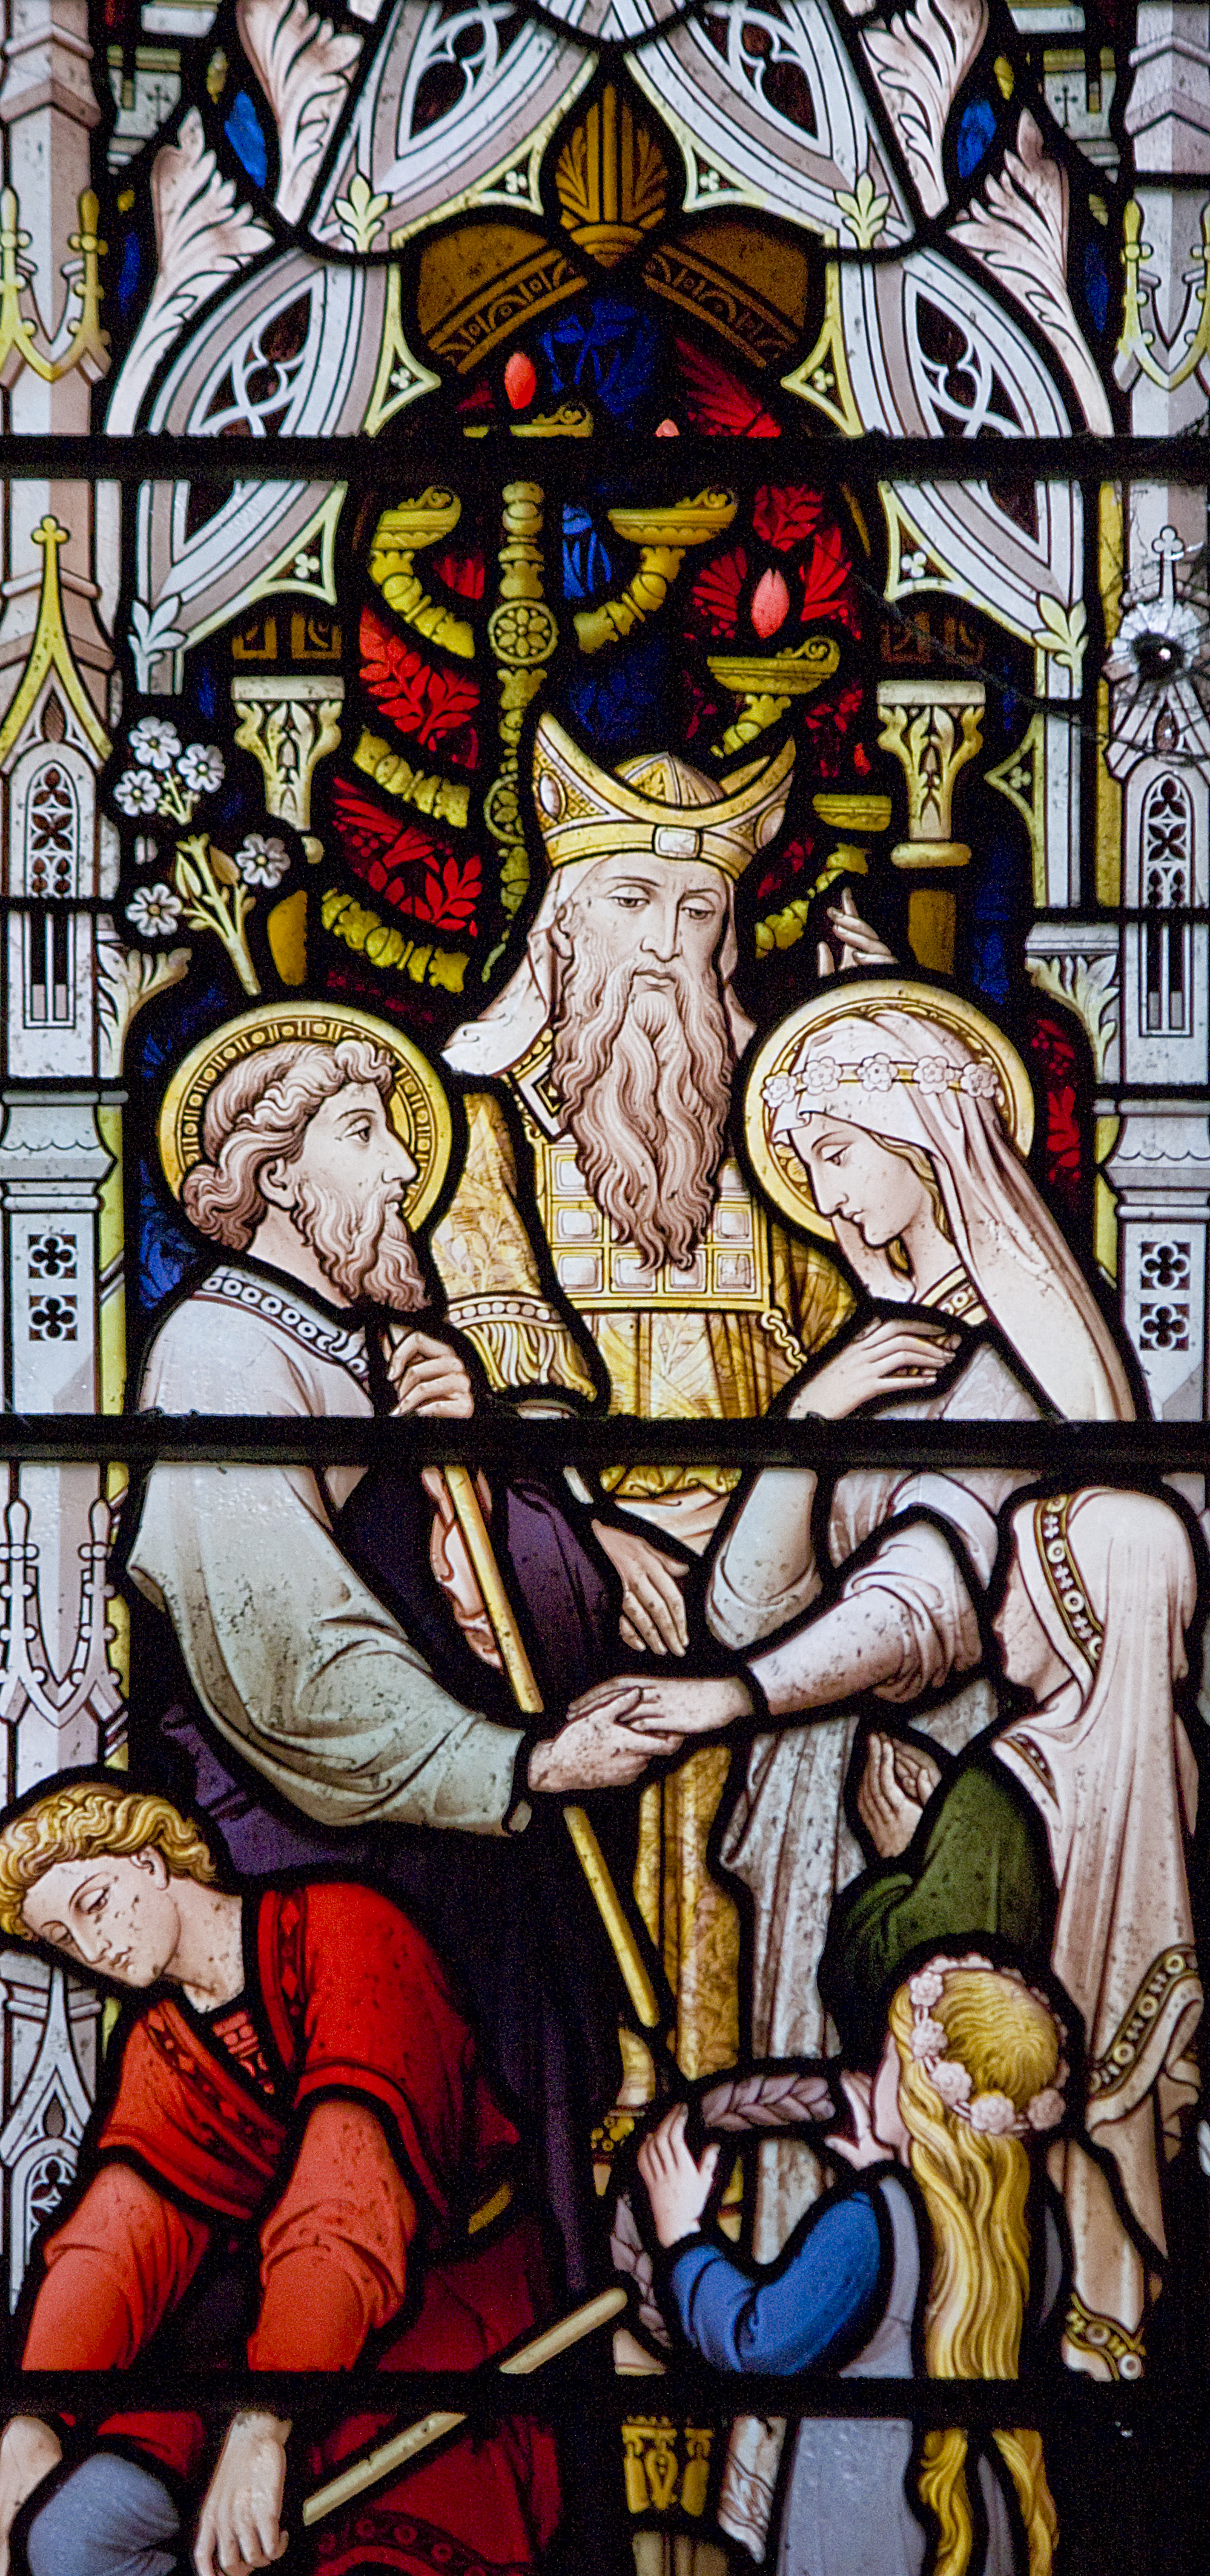 Le mariage de Marie & Joseph – Abbaye de Downside, Angleterre.